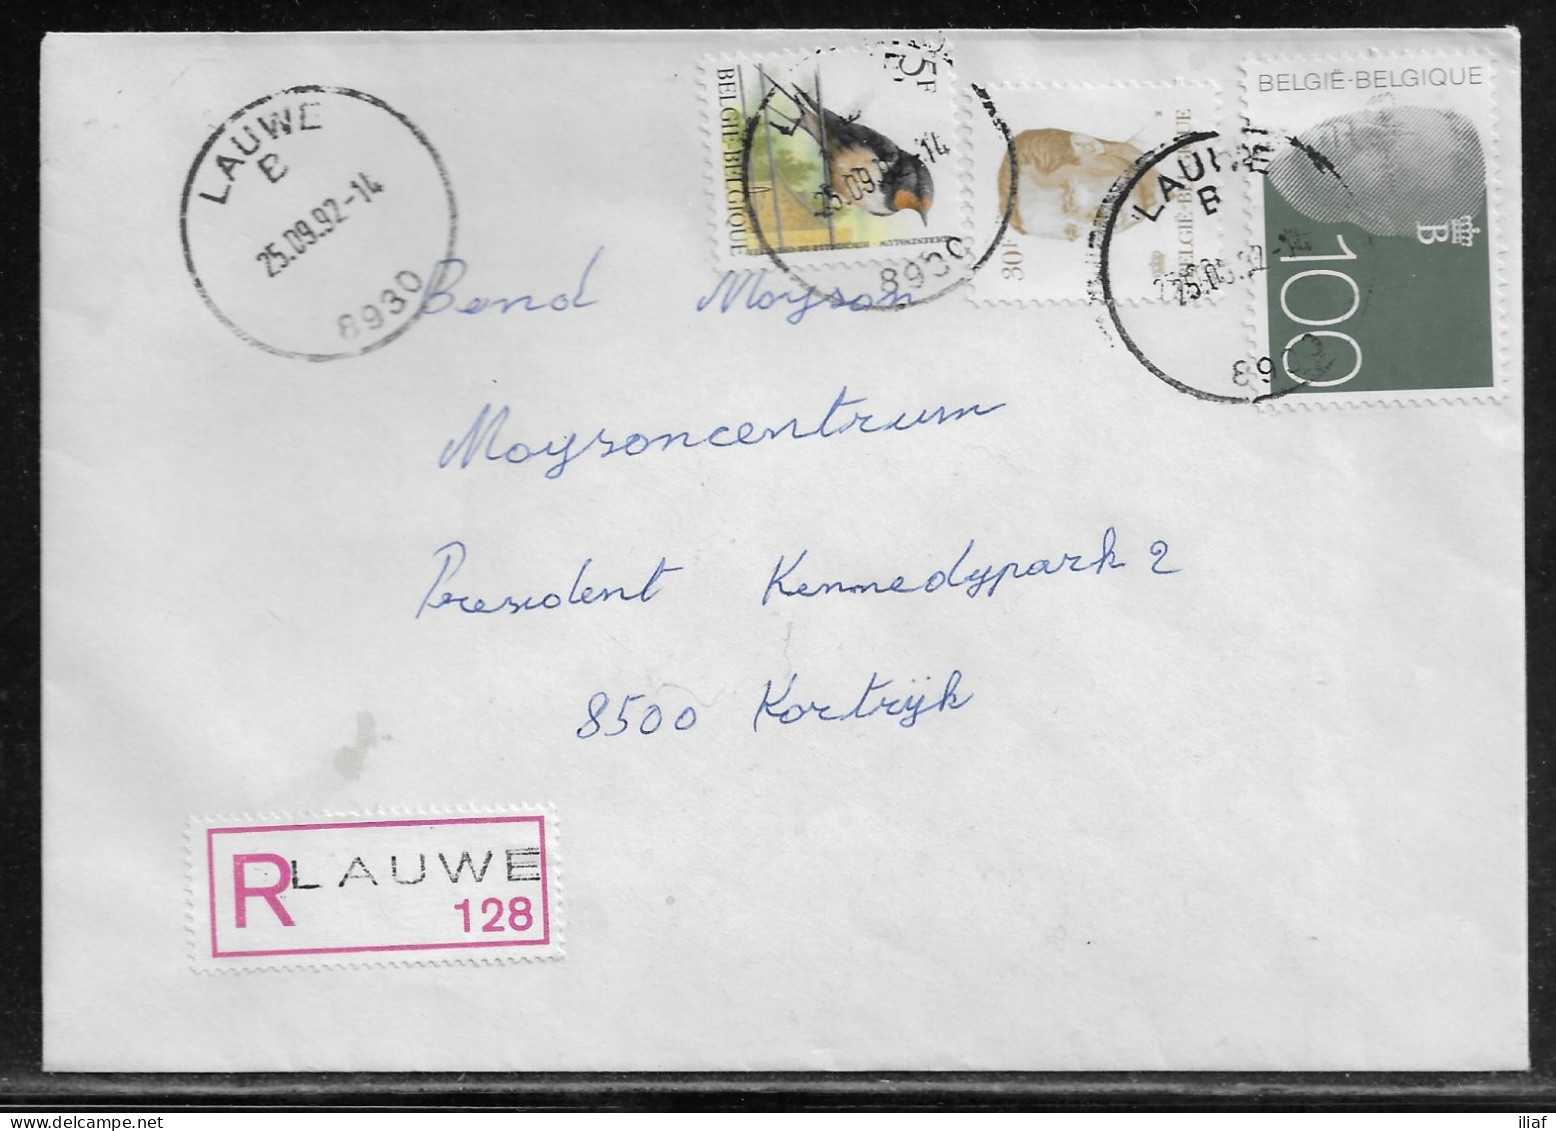 Belgium. Stamps Mi. 2527, Mi. 2533, Mi. 2212 On Registered Letter Sent From Lauwe On 25.09.1992 For Kortrijk. - Lettres & Documents